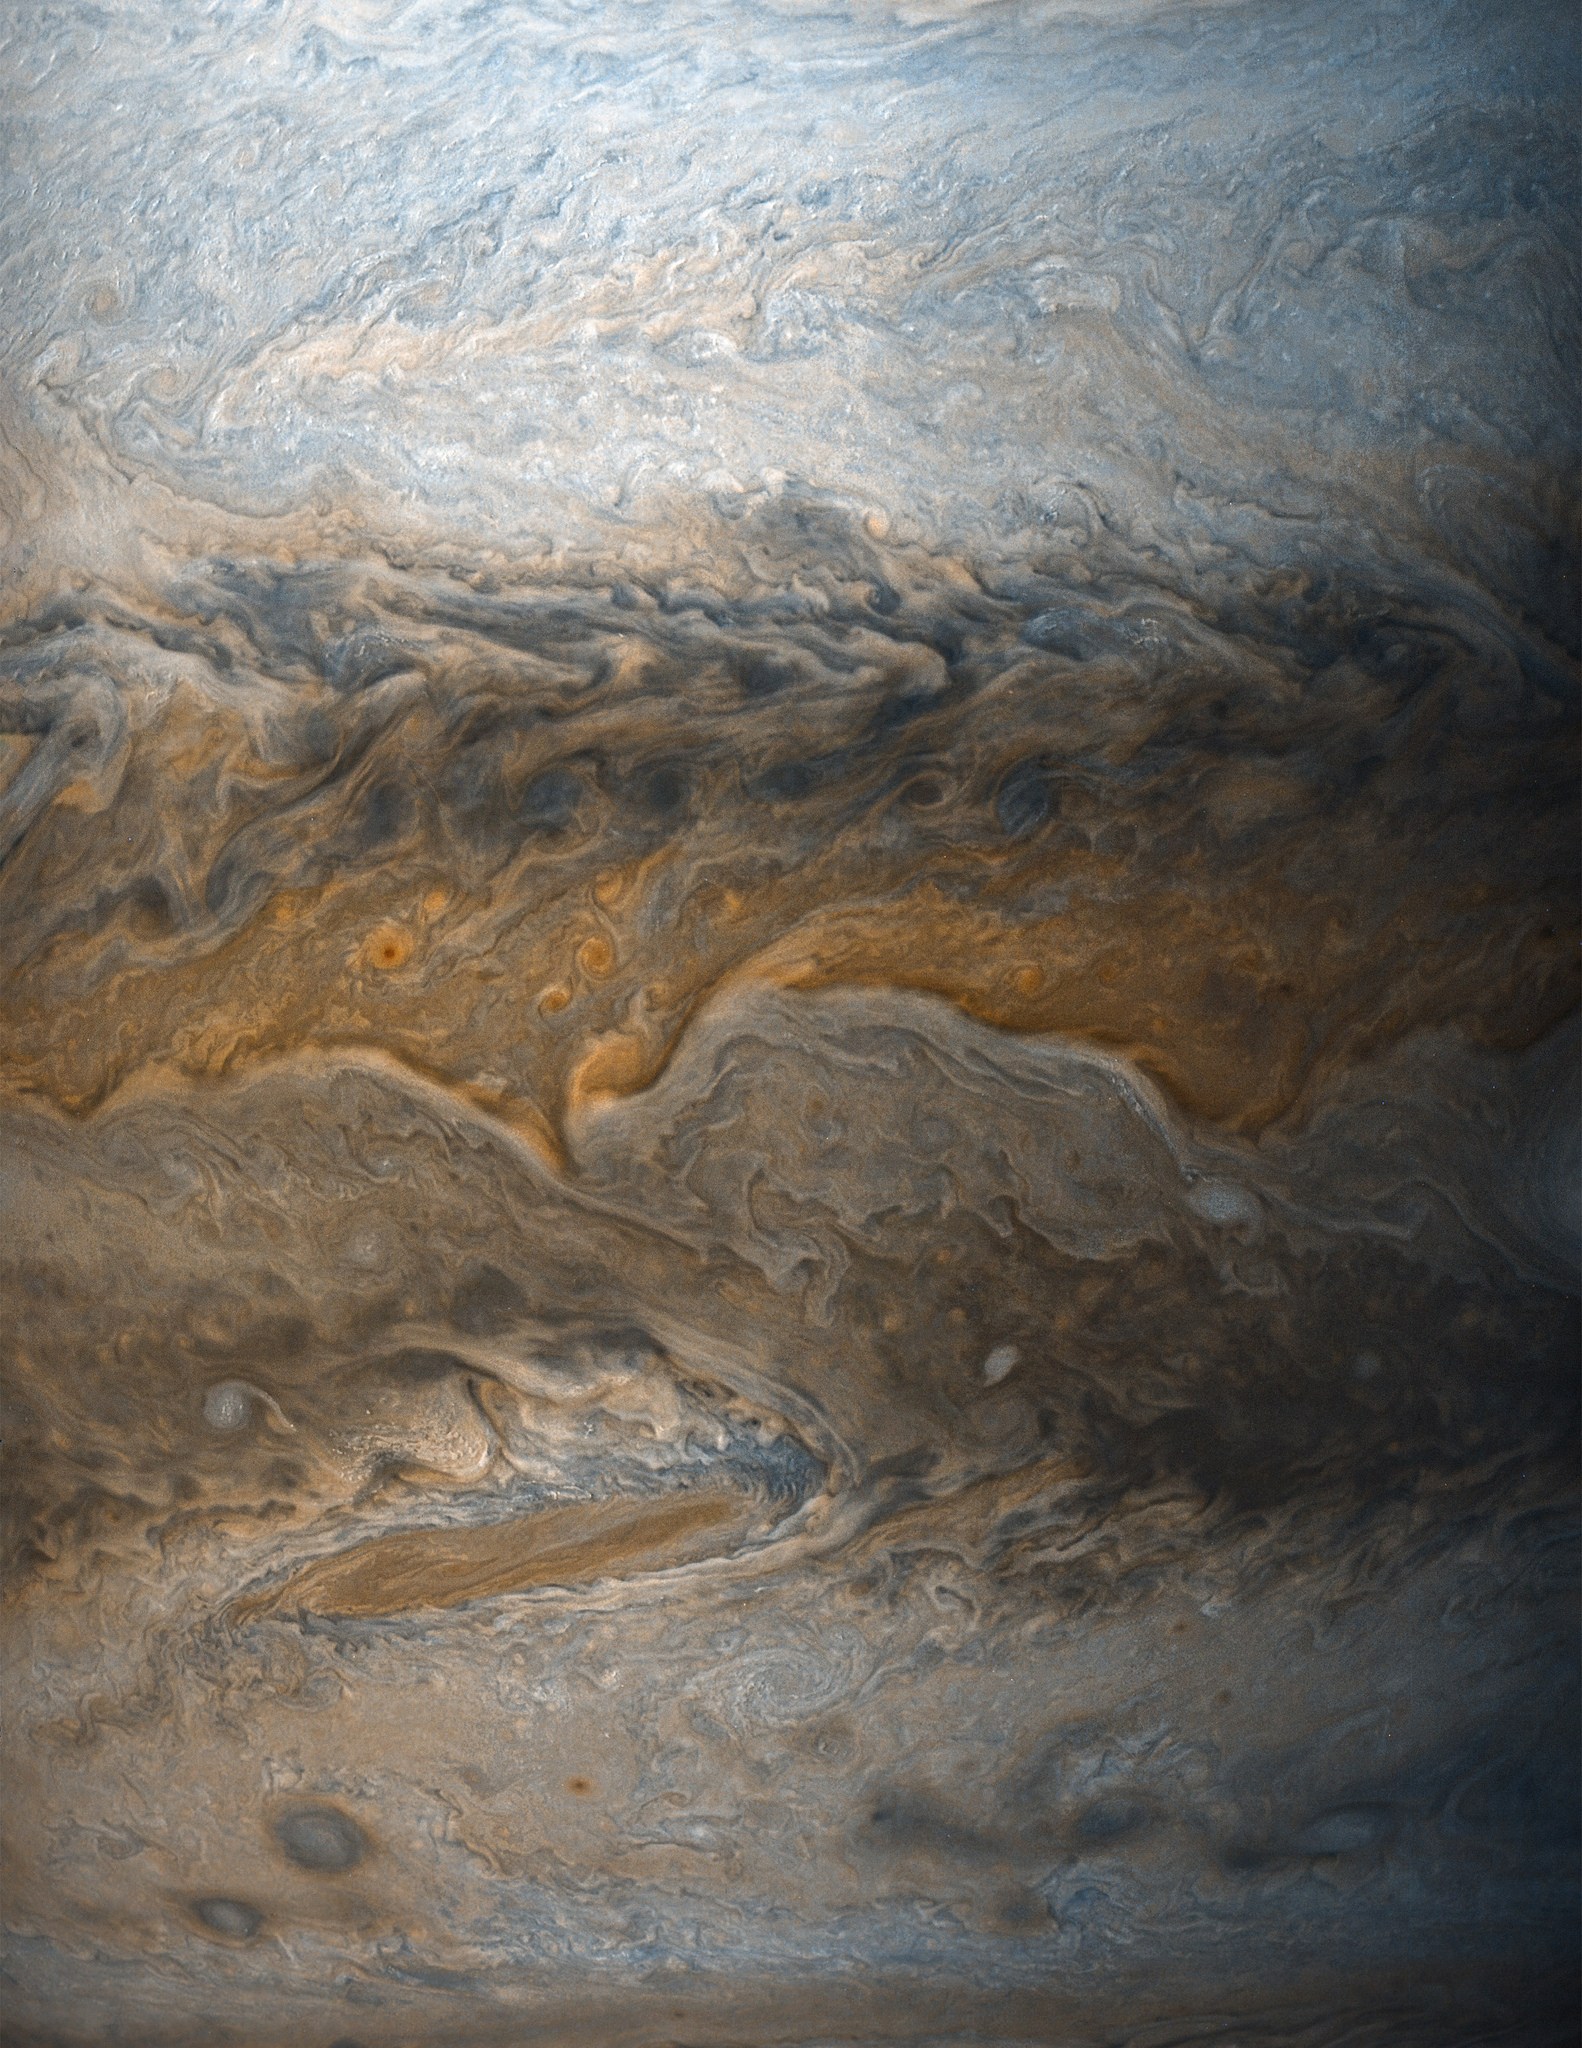 Jupiters upper atmosphere.